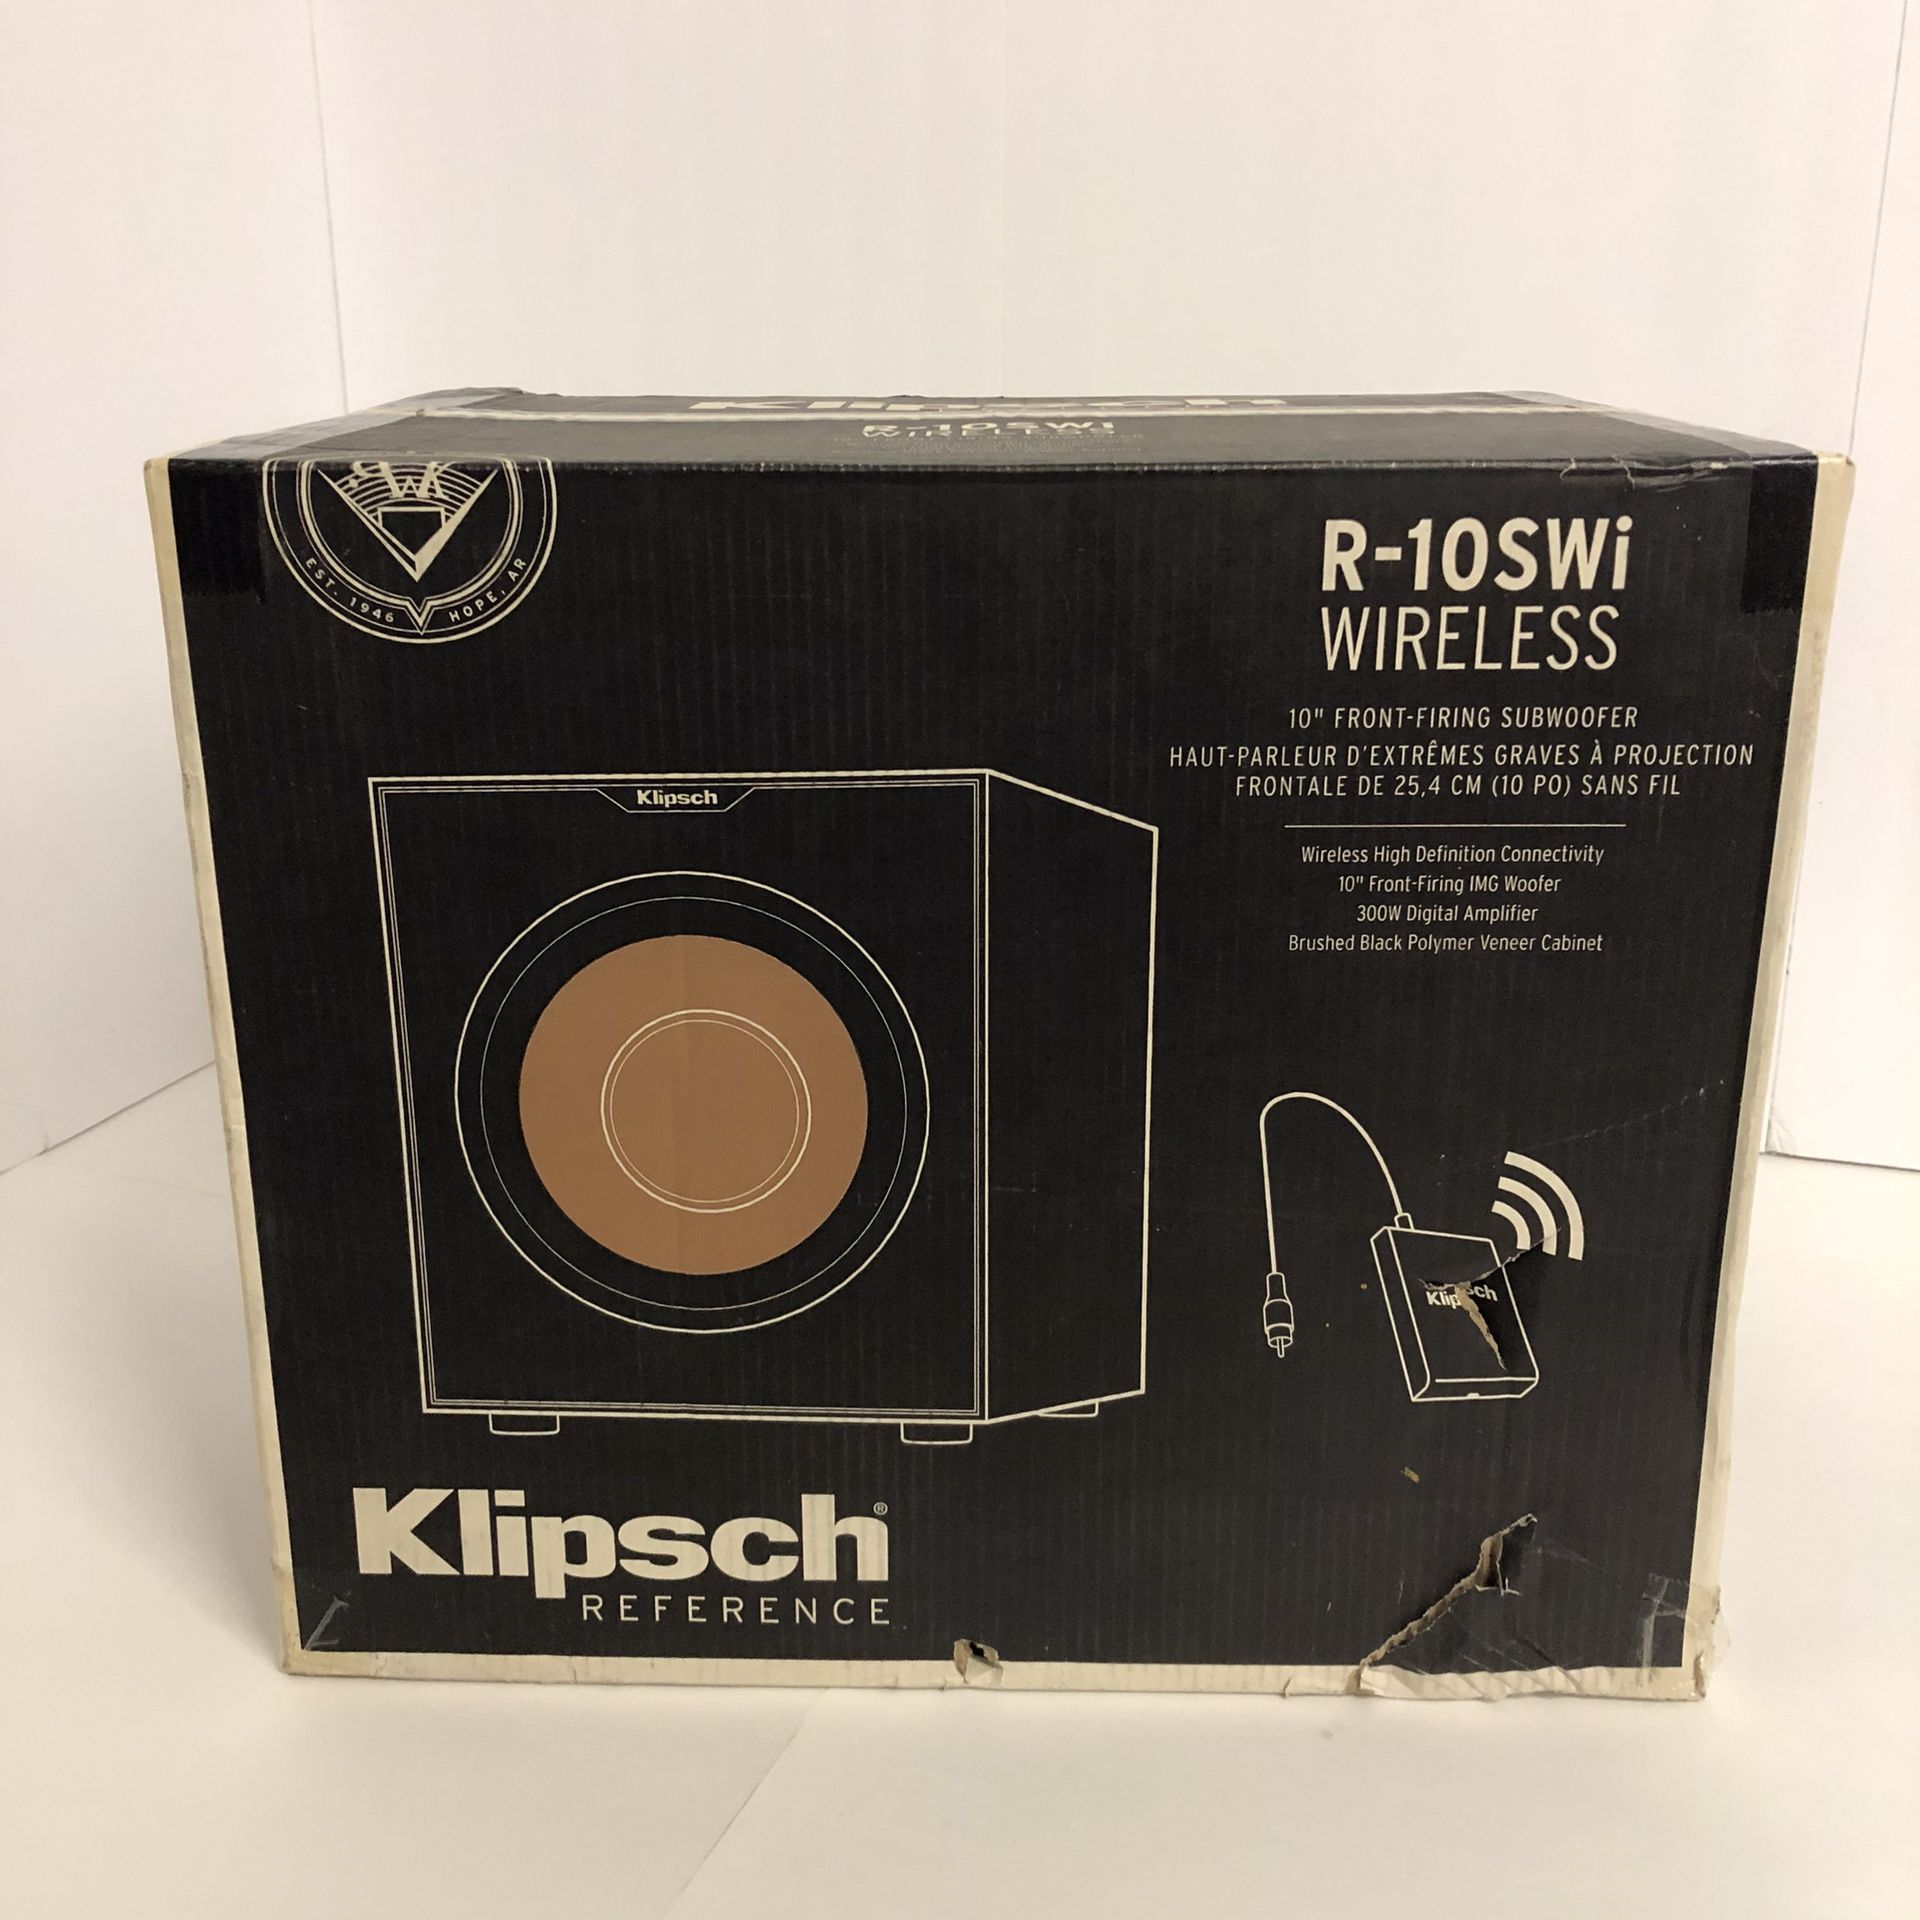 Klipsch wireless Home theater subwoofer 10” 300 watts